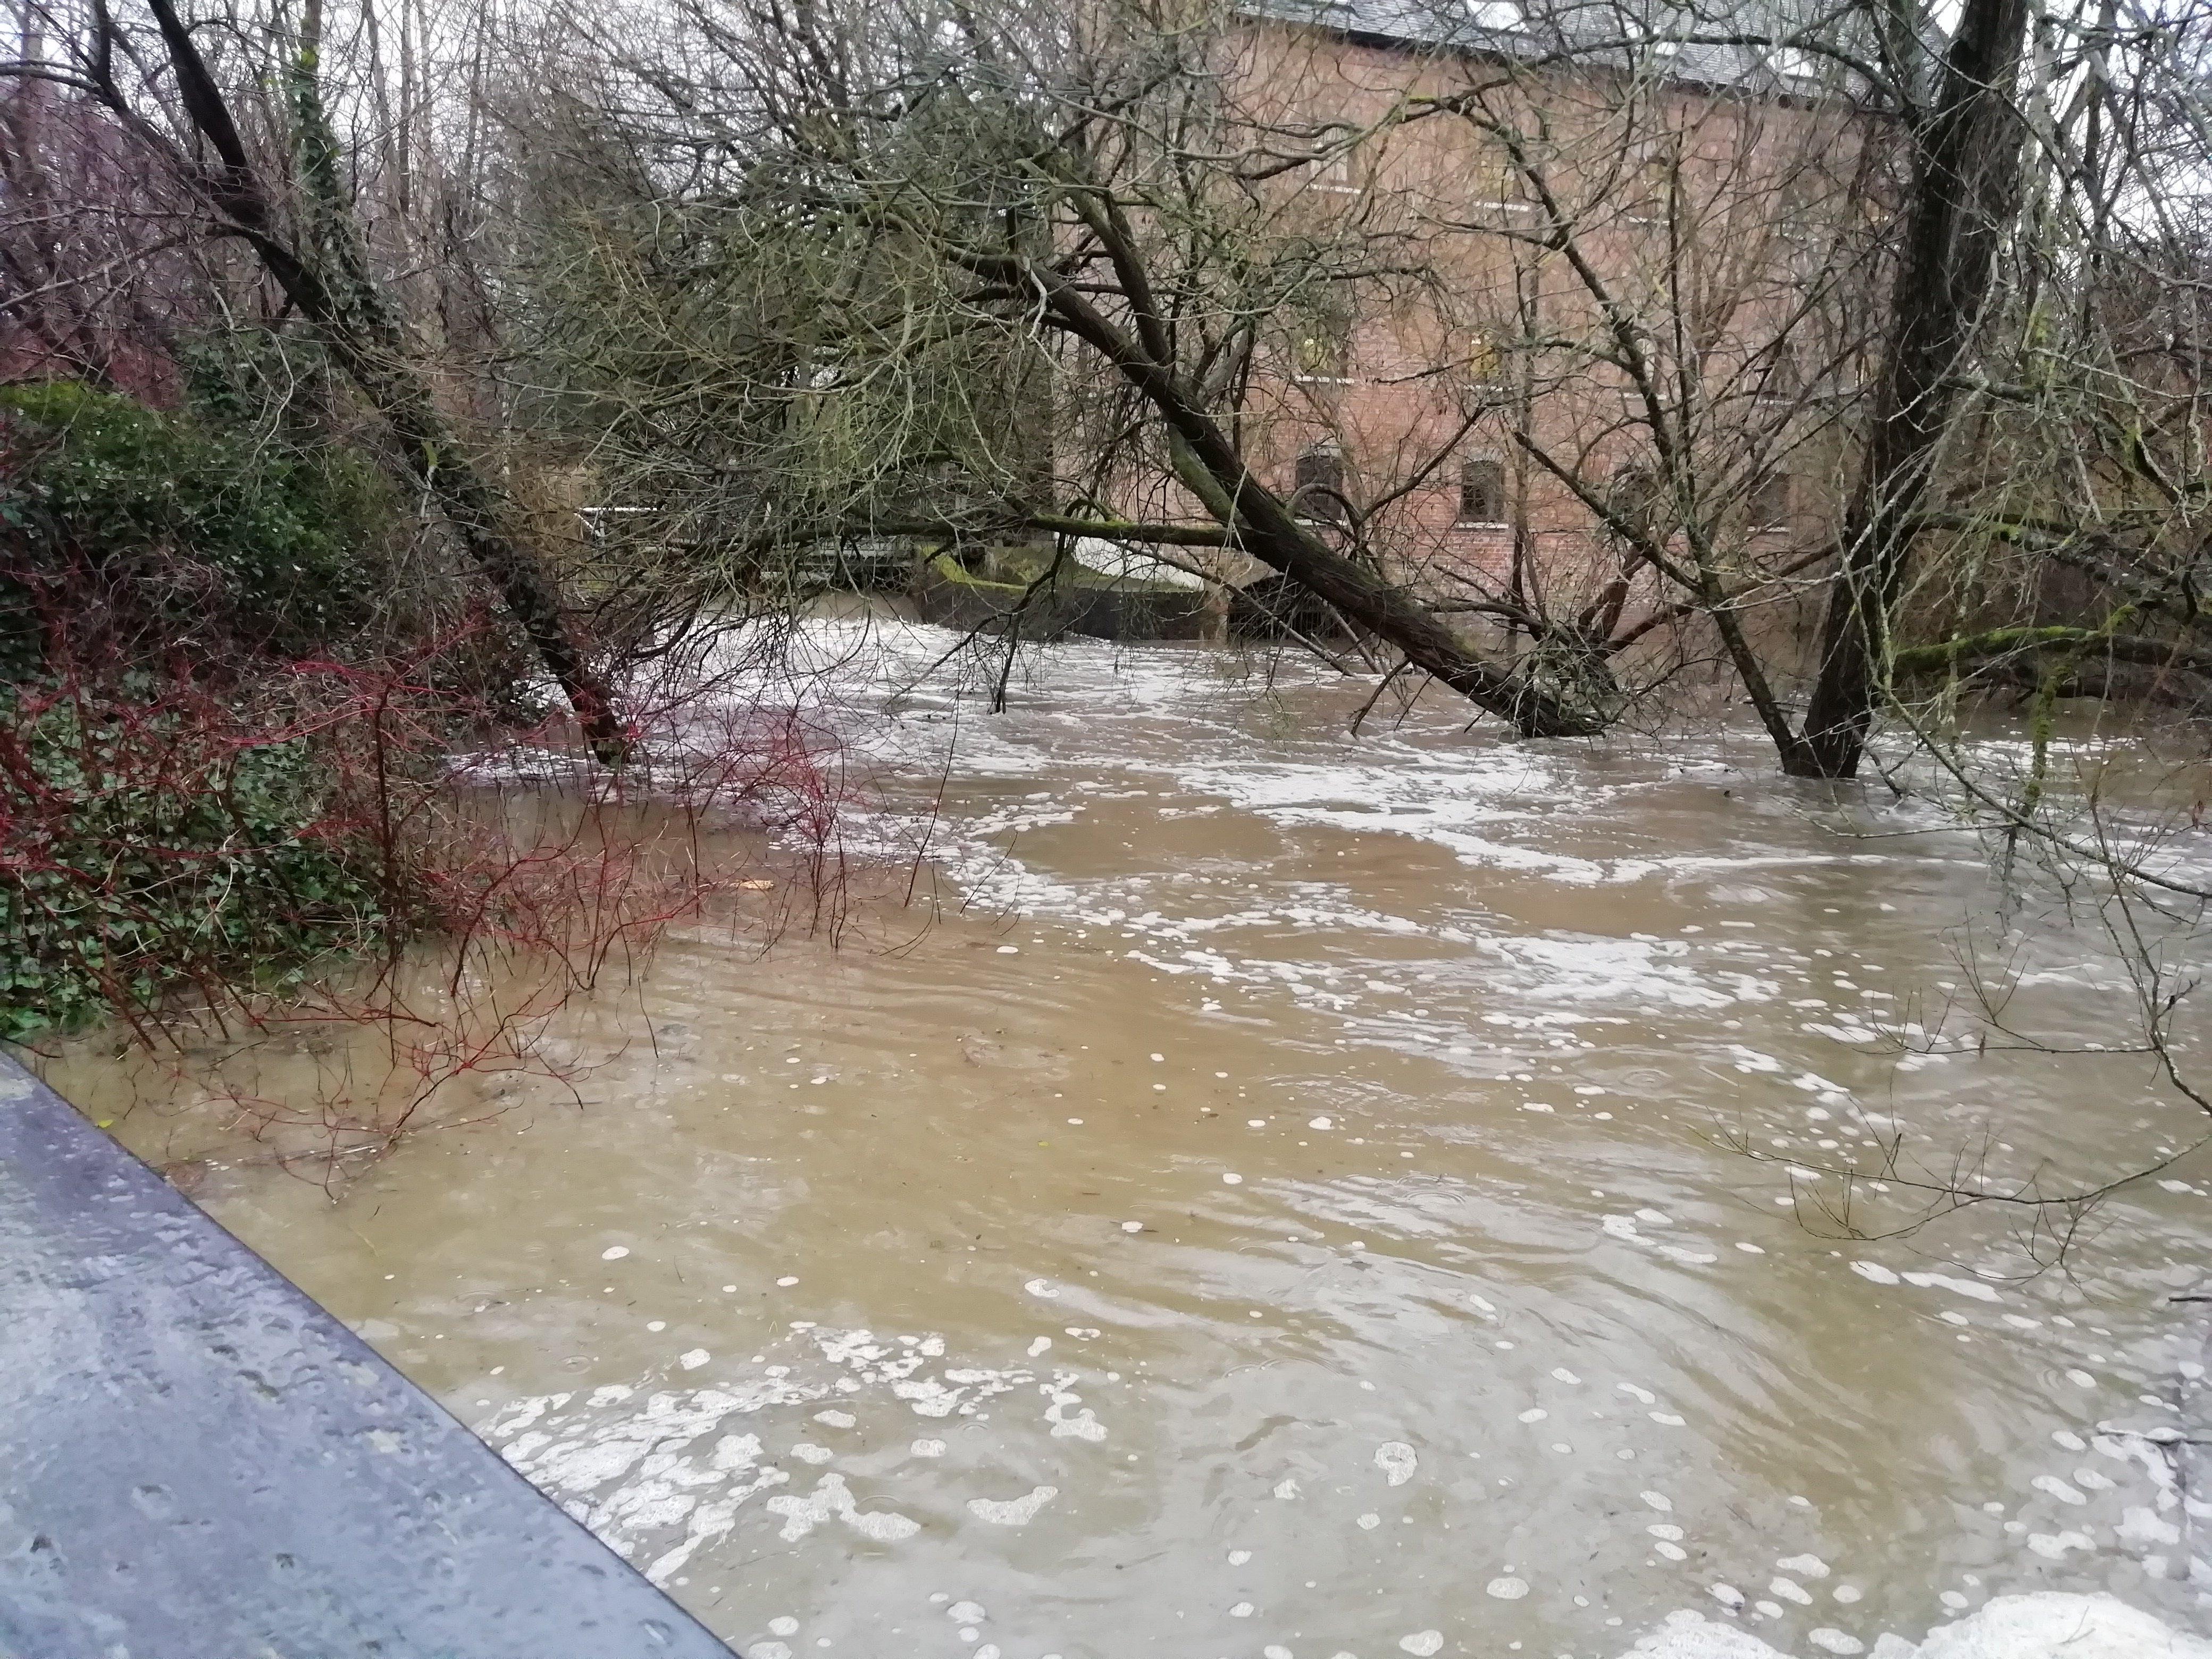 The River Arun has burst its banks in Horsham